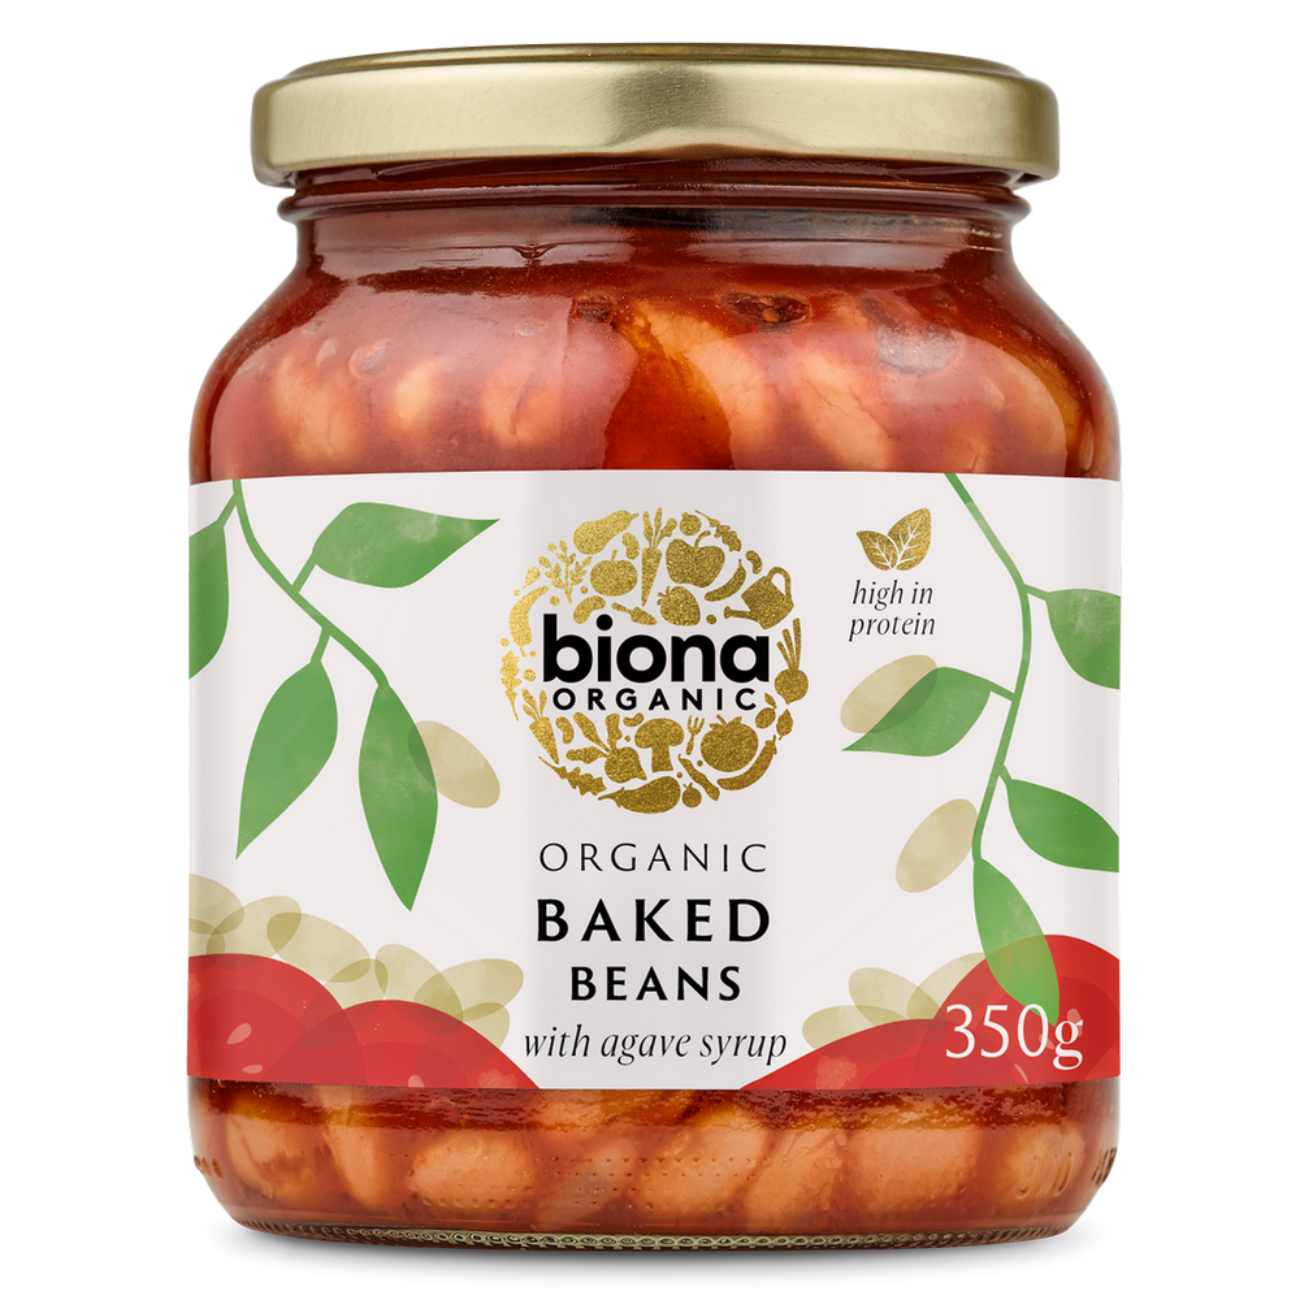 Organic Baked Beans in Tomato sauce 340g